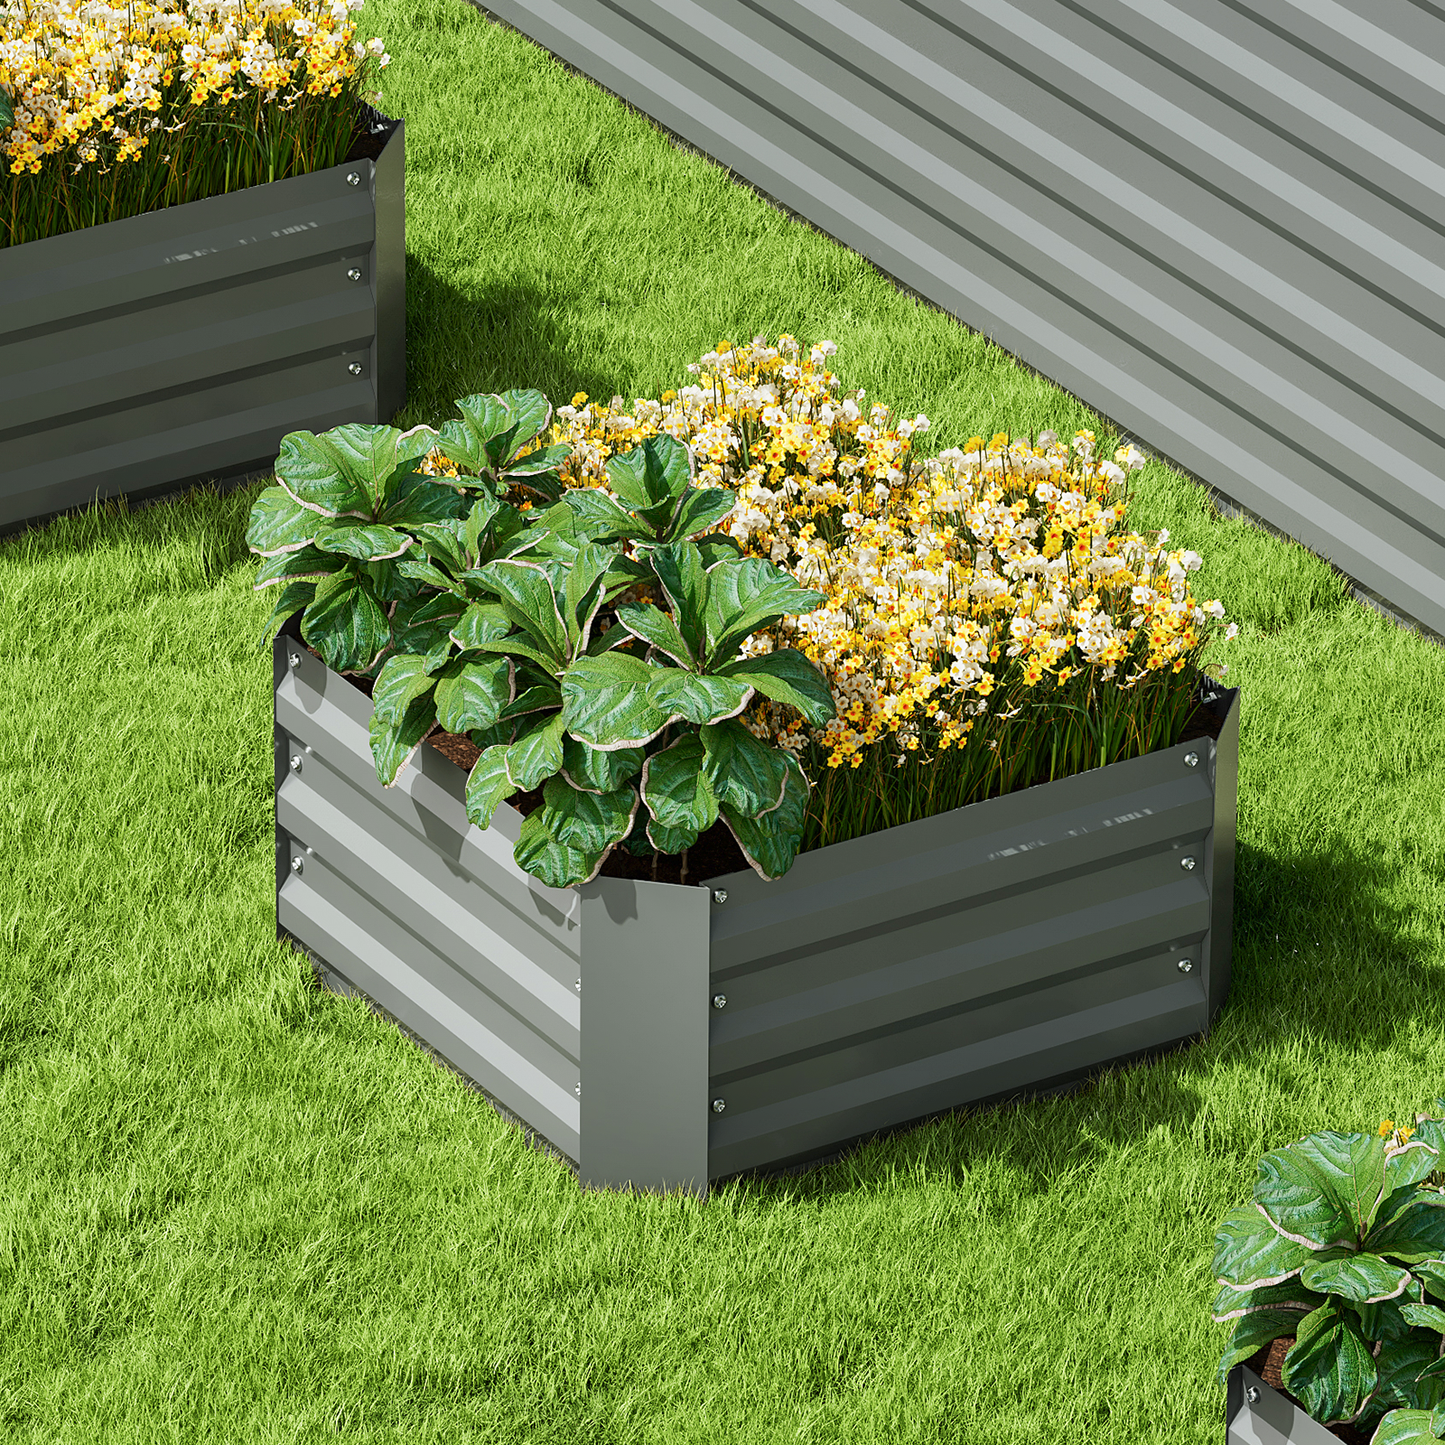 12"H Patio Metal Raised Garden Bed Kit Vegetable Flower Planter 24" Square Box